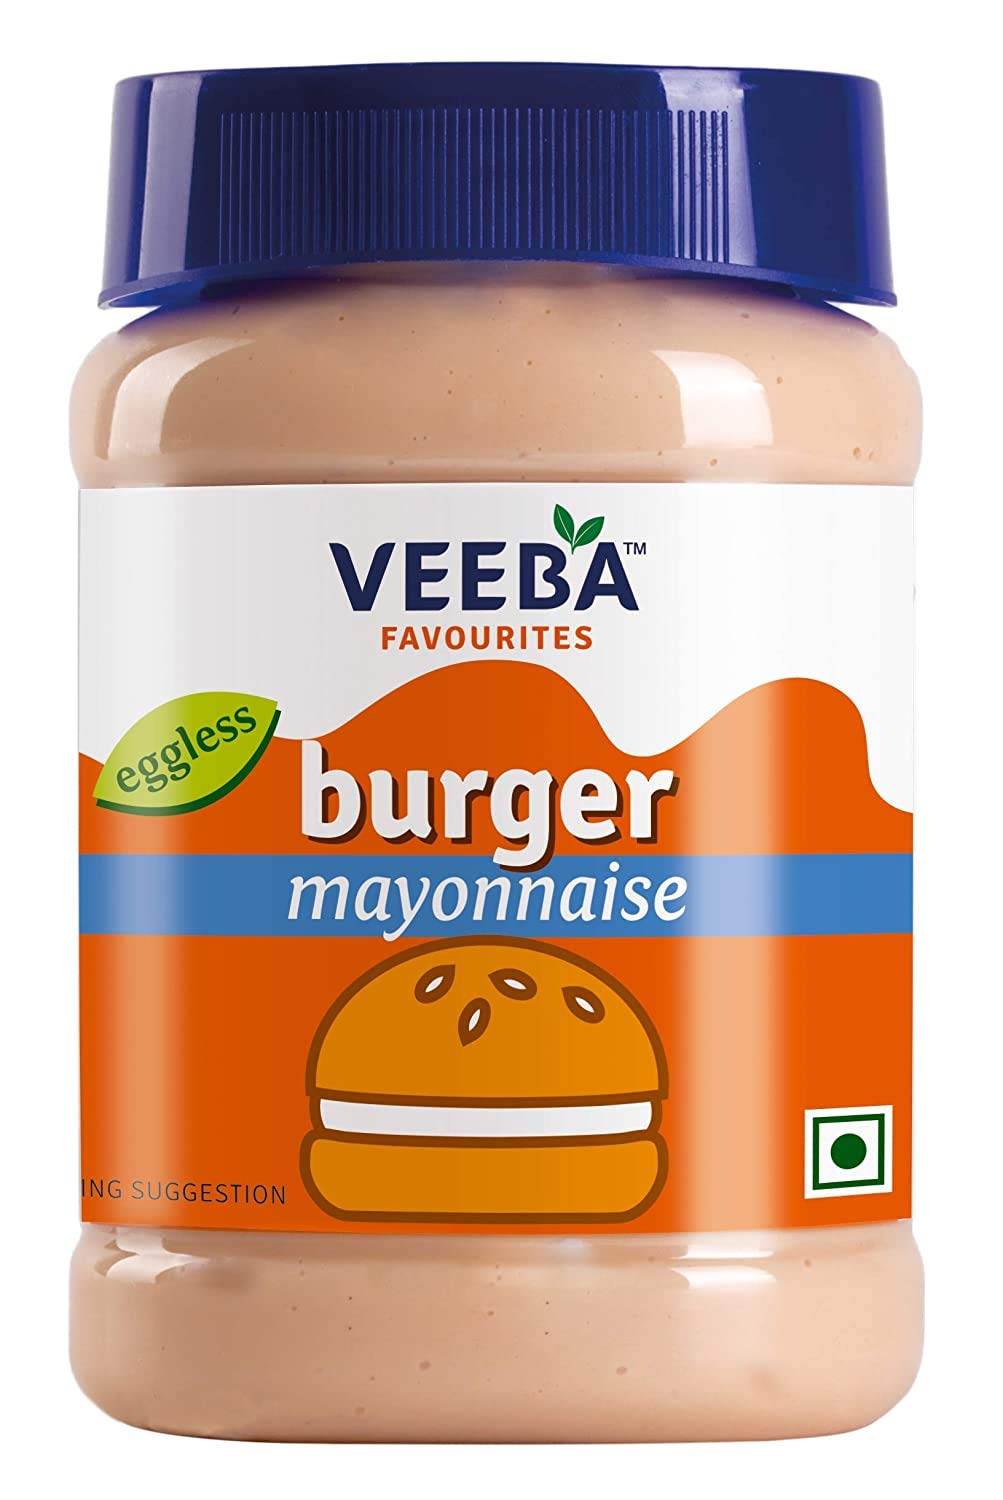 Veeba burger mayonnaise